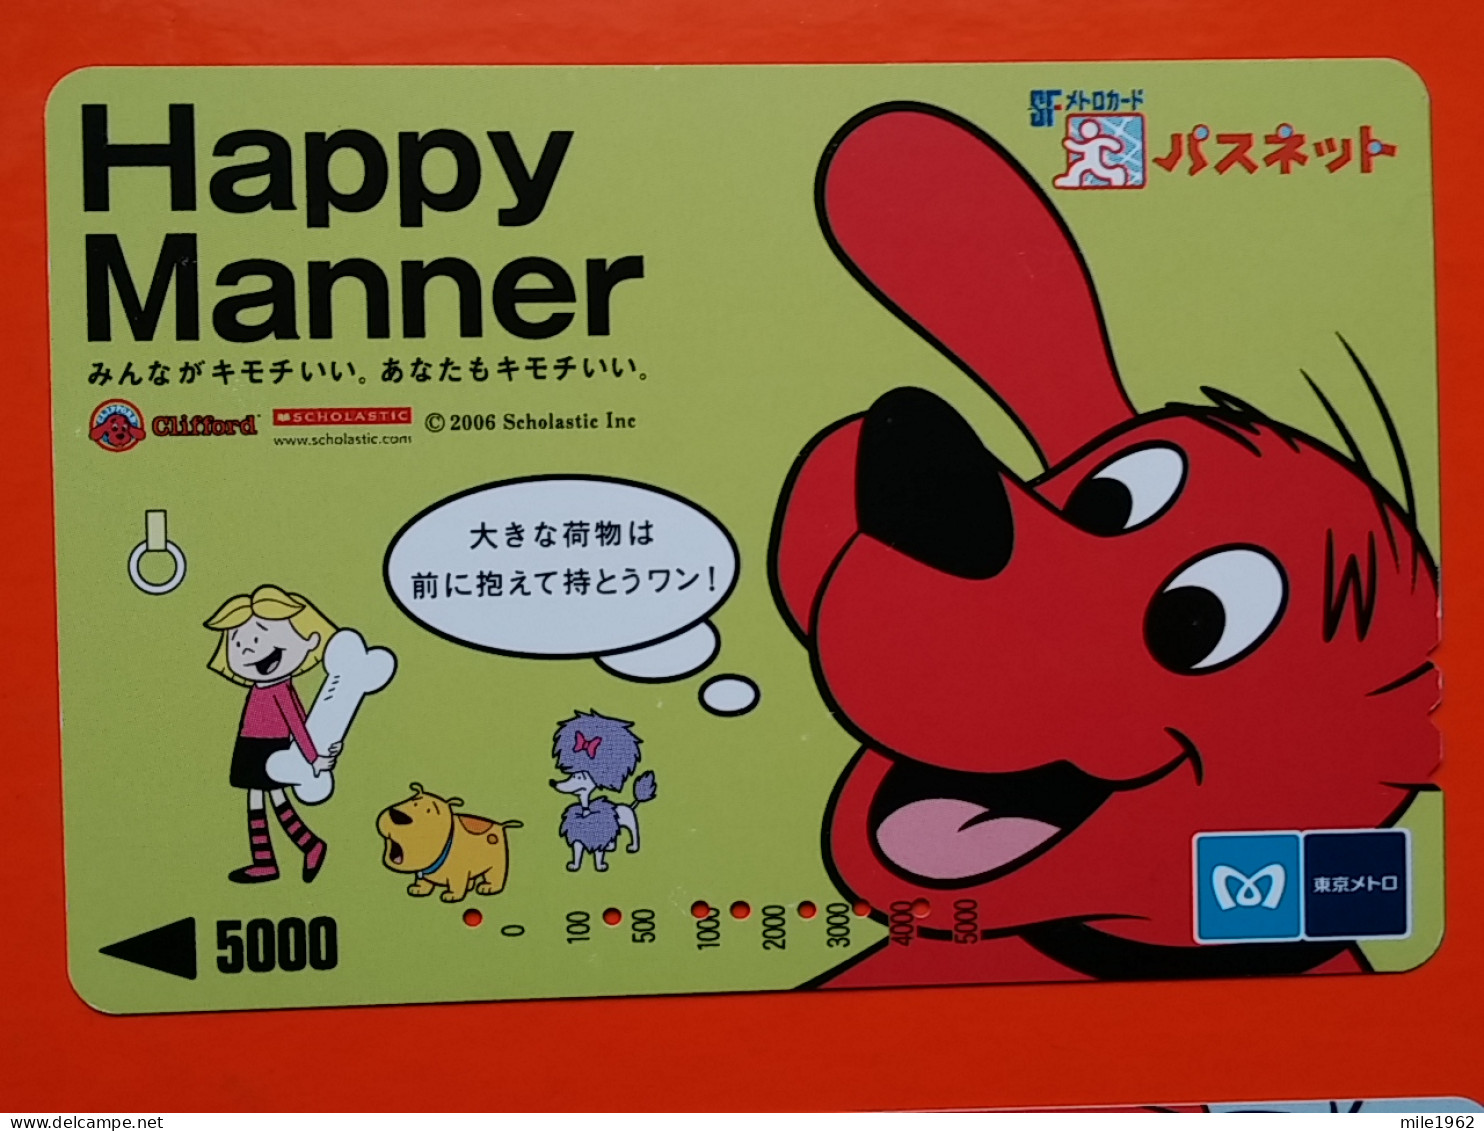 T-189 - JAPAN -JAPON, NIPON, Carte Prepayee - Animal, Dog, Chien, Happy Manner - Cani